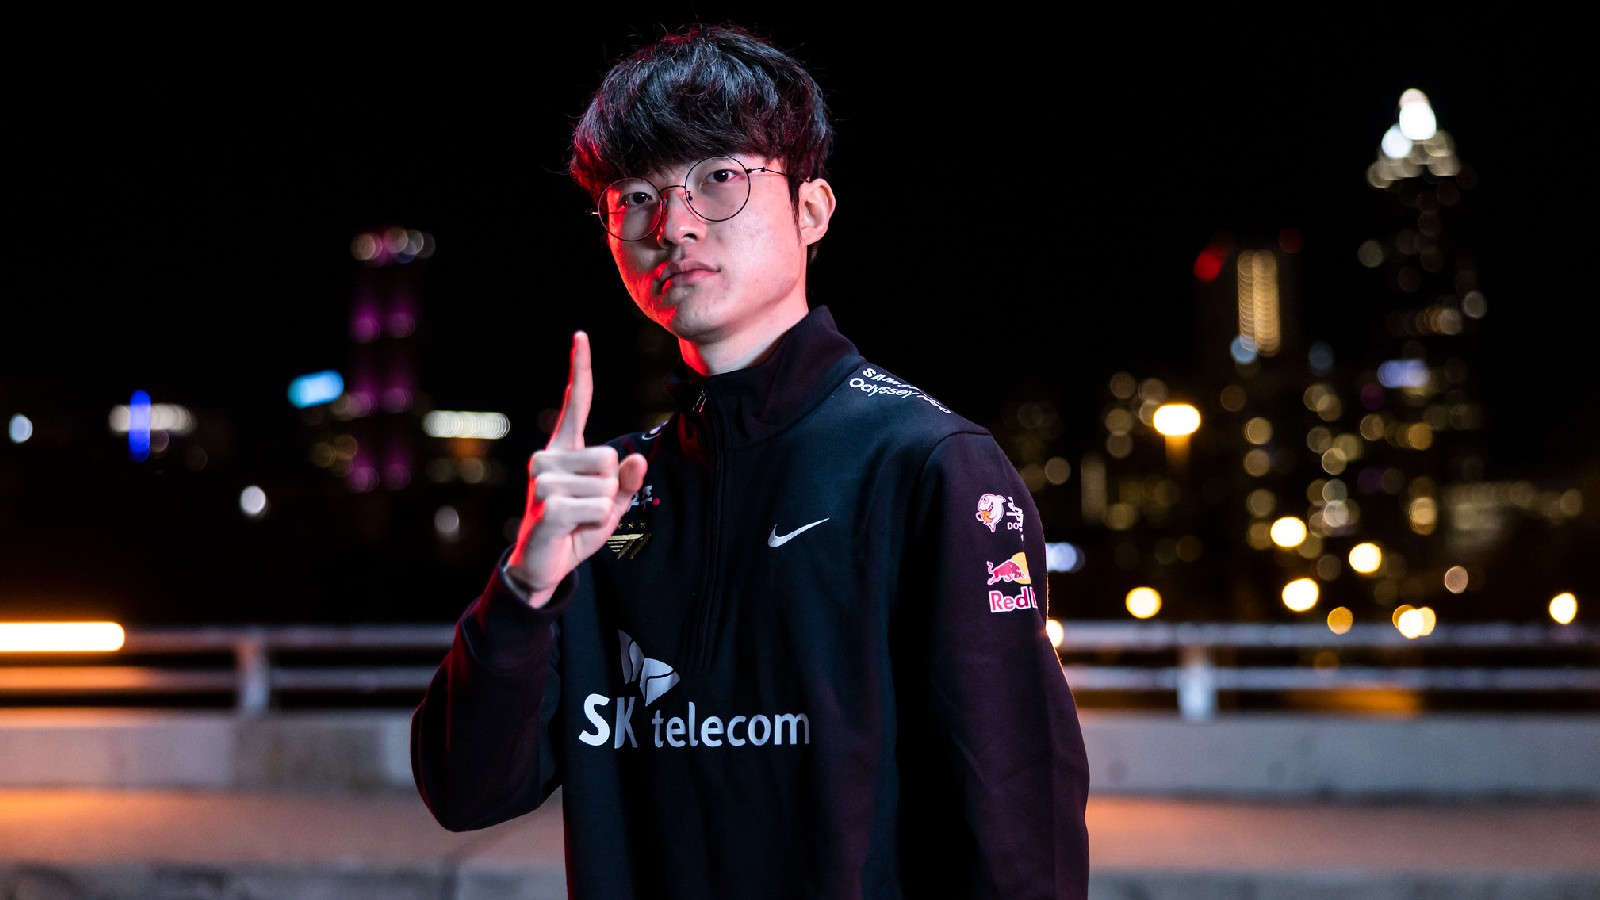 S. Korean pro gamer Faker enters Hangzhou